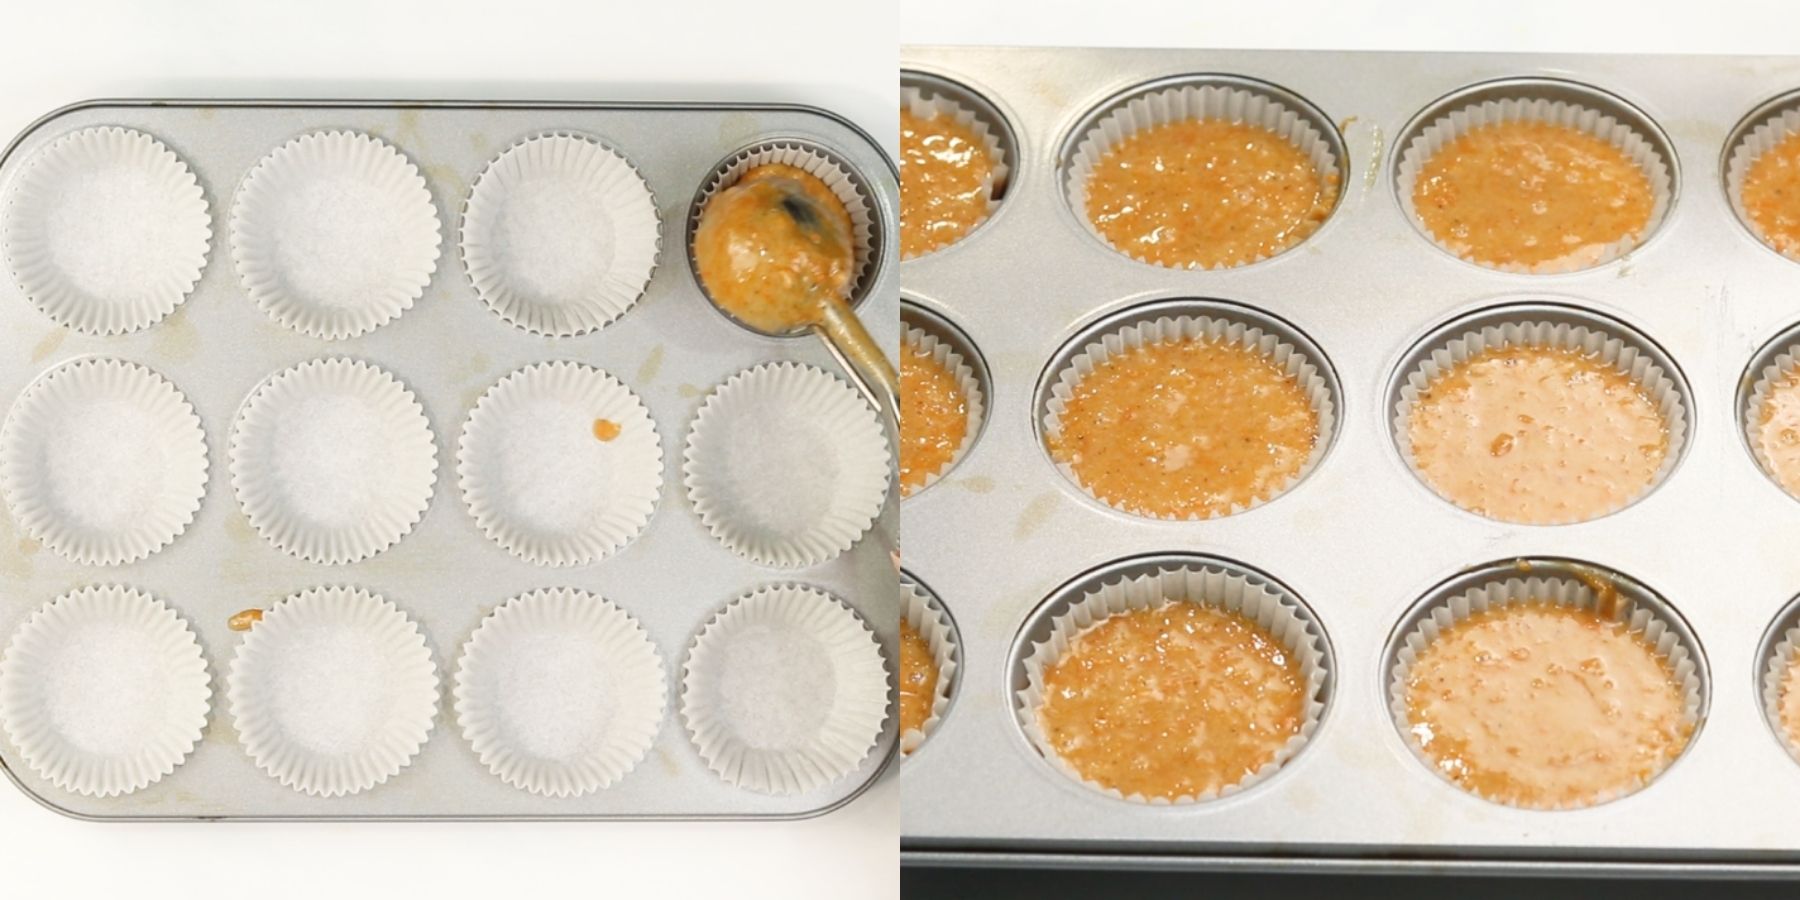 Cupcakes process shots.